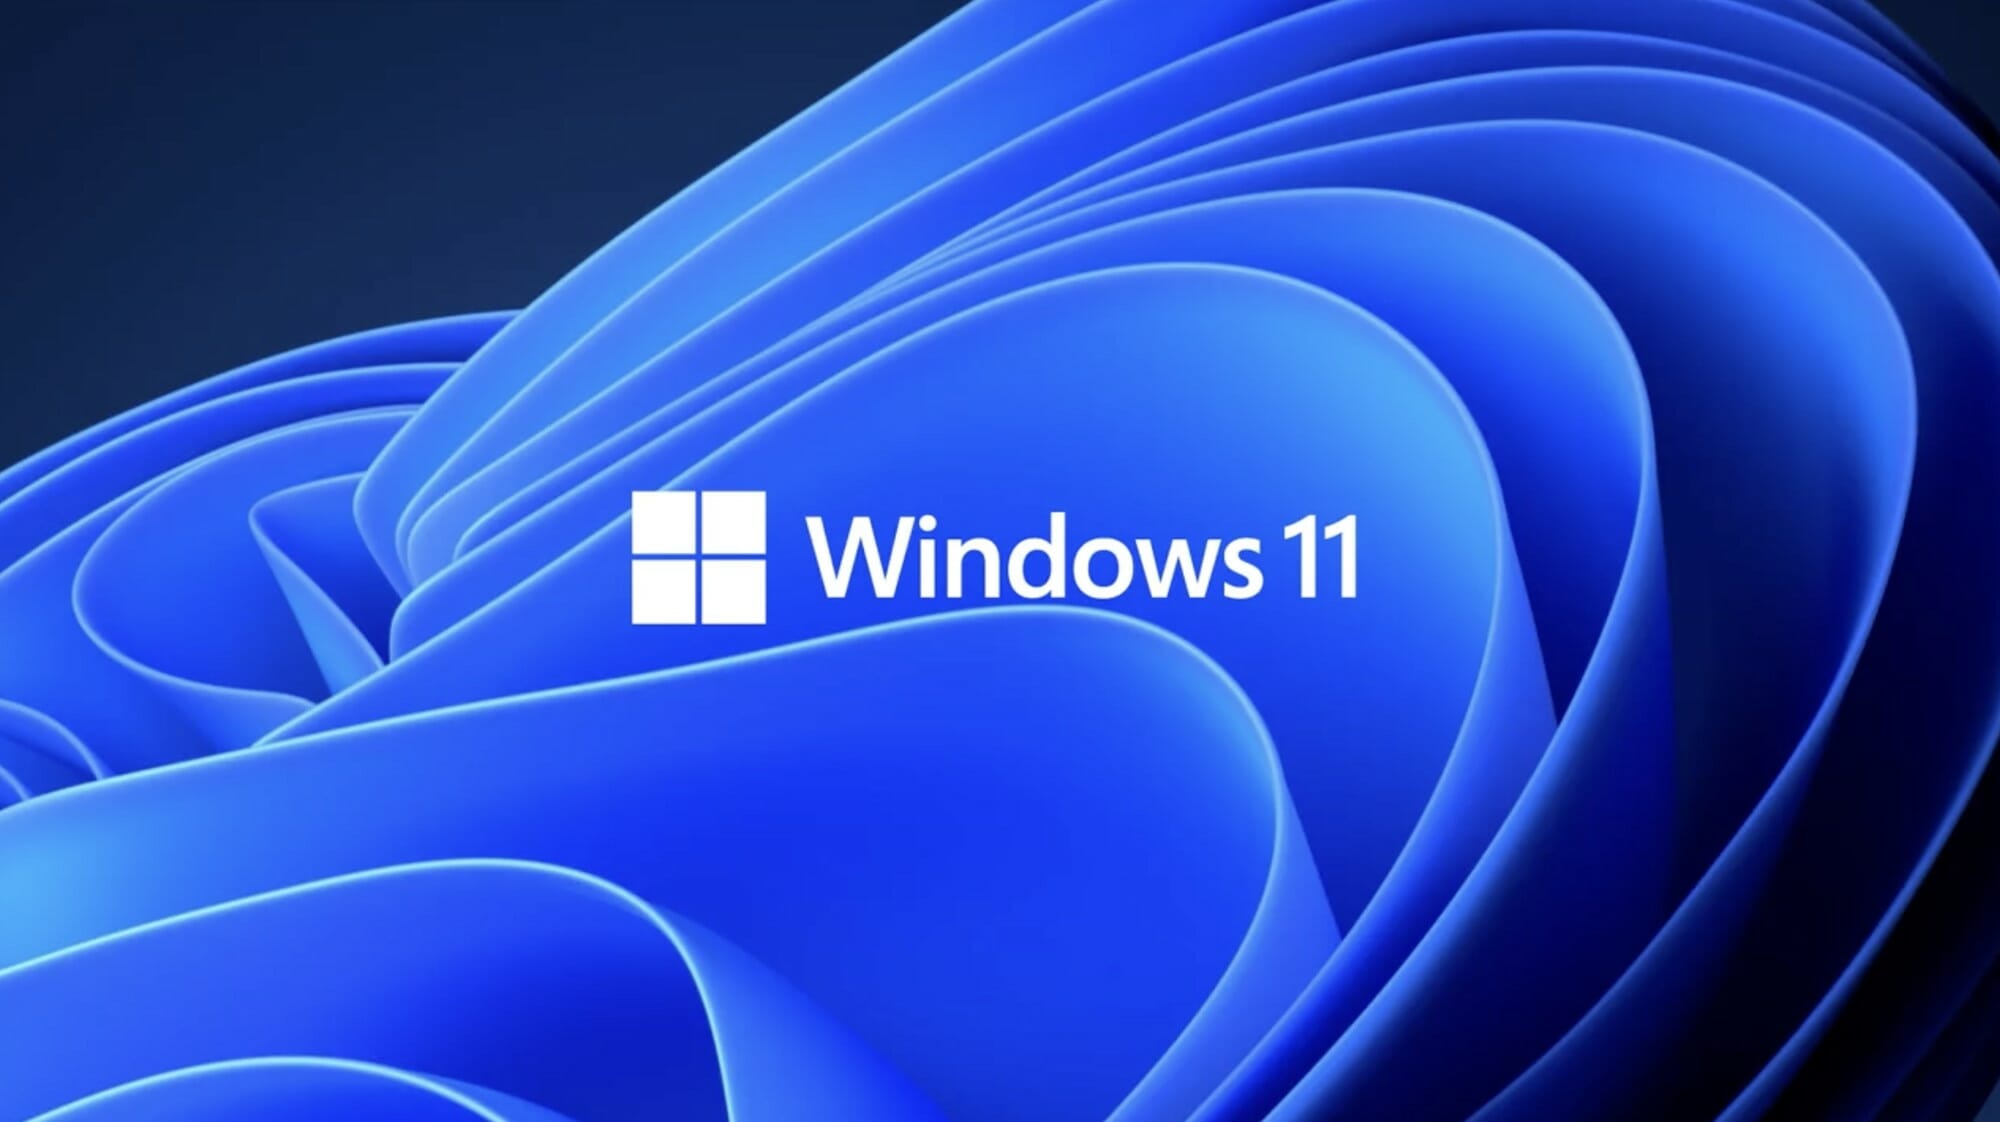 Windows 11 Wallpaper 4K - Windows 11 startup sound, UI, wallpapers, and